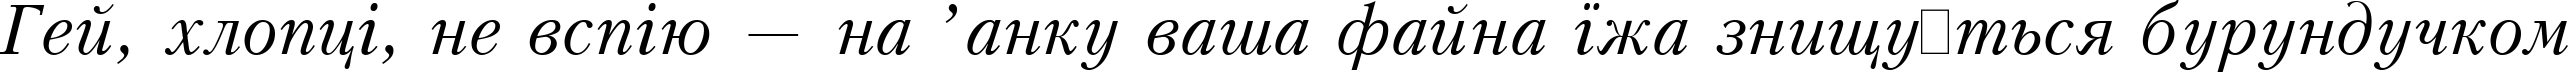 Пример написания шрифтом Kudrashov Italic:001.001 текста на украинском